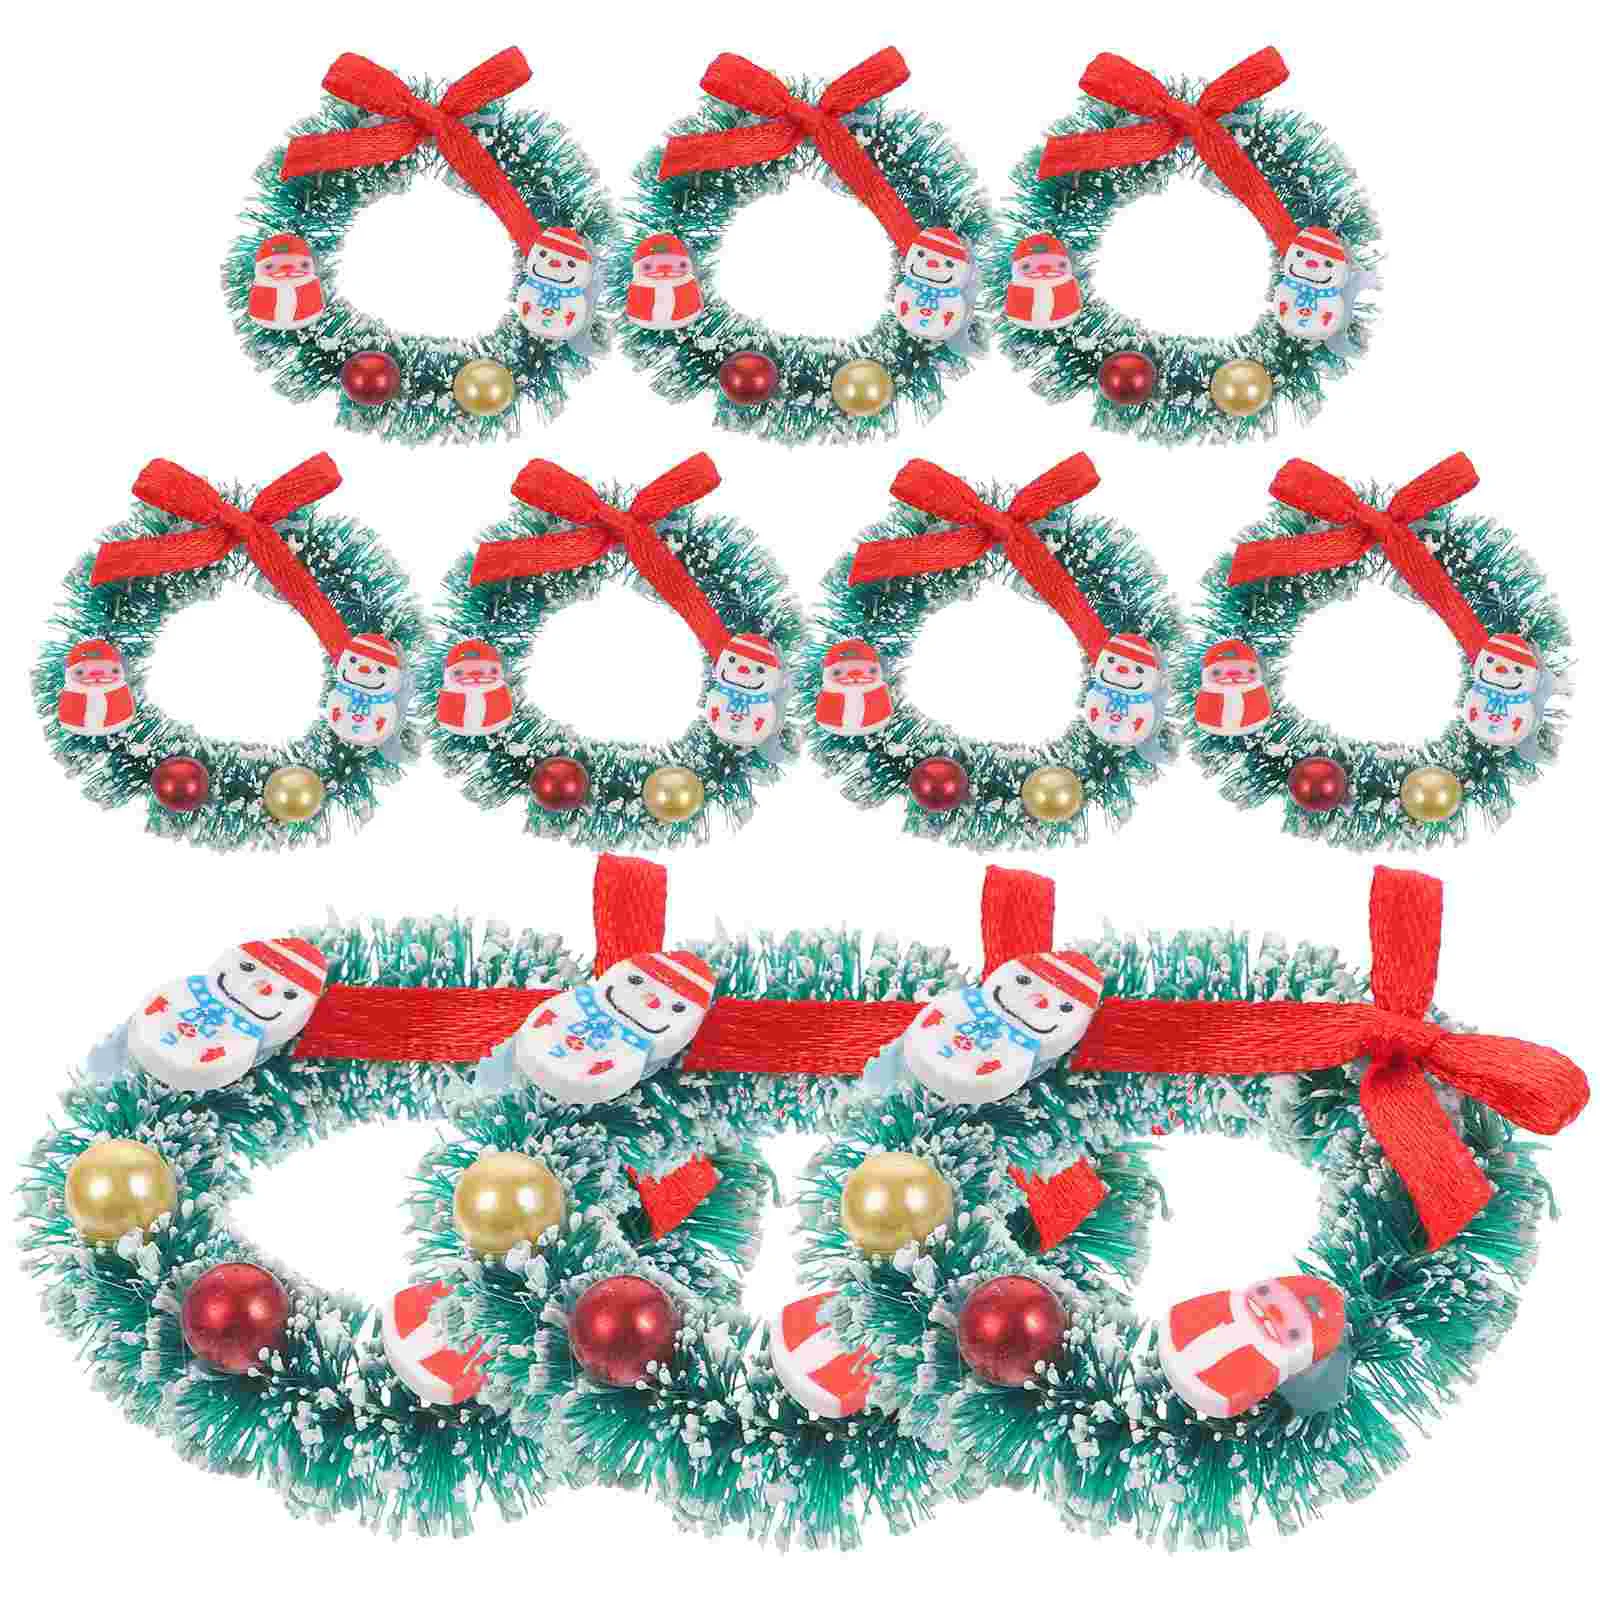 

10 Pcs Miniature Wreath Xmas Figurine Christmas Photo Props Ornaments Resin Supplies Decorations Crafts Room Bedroom